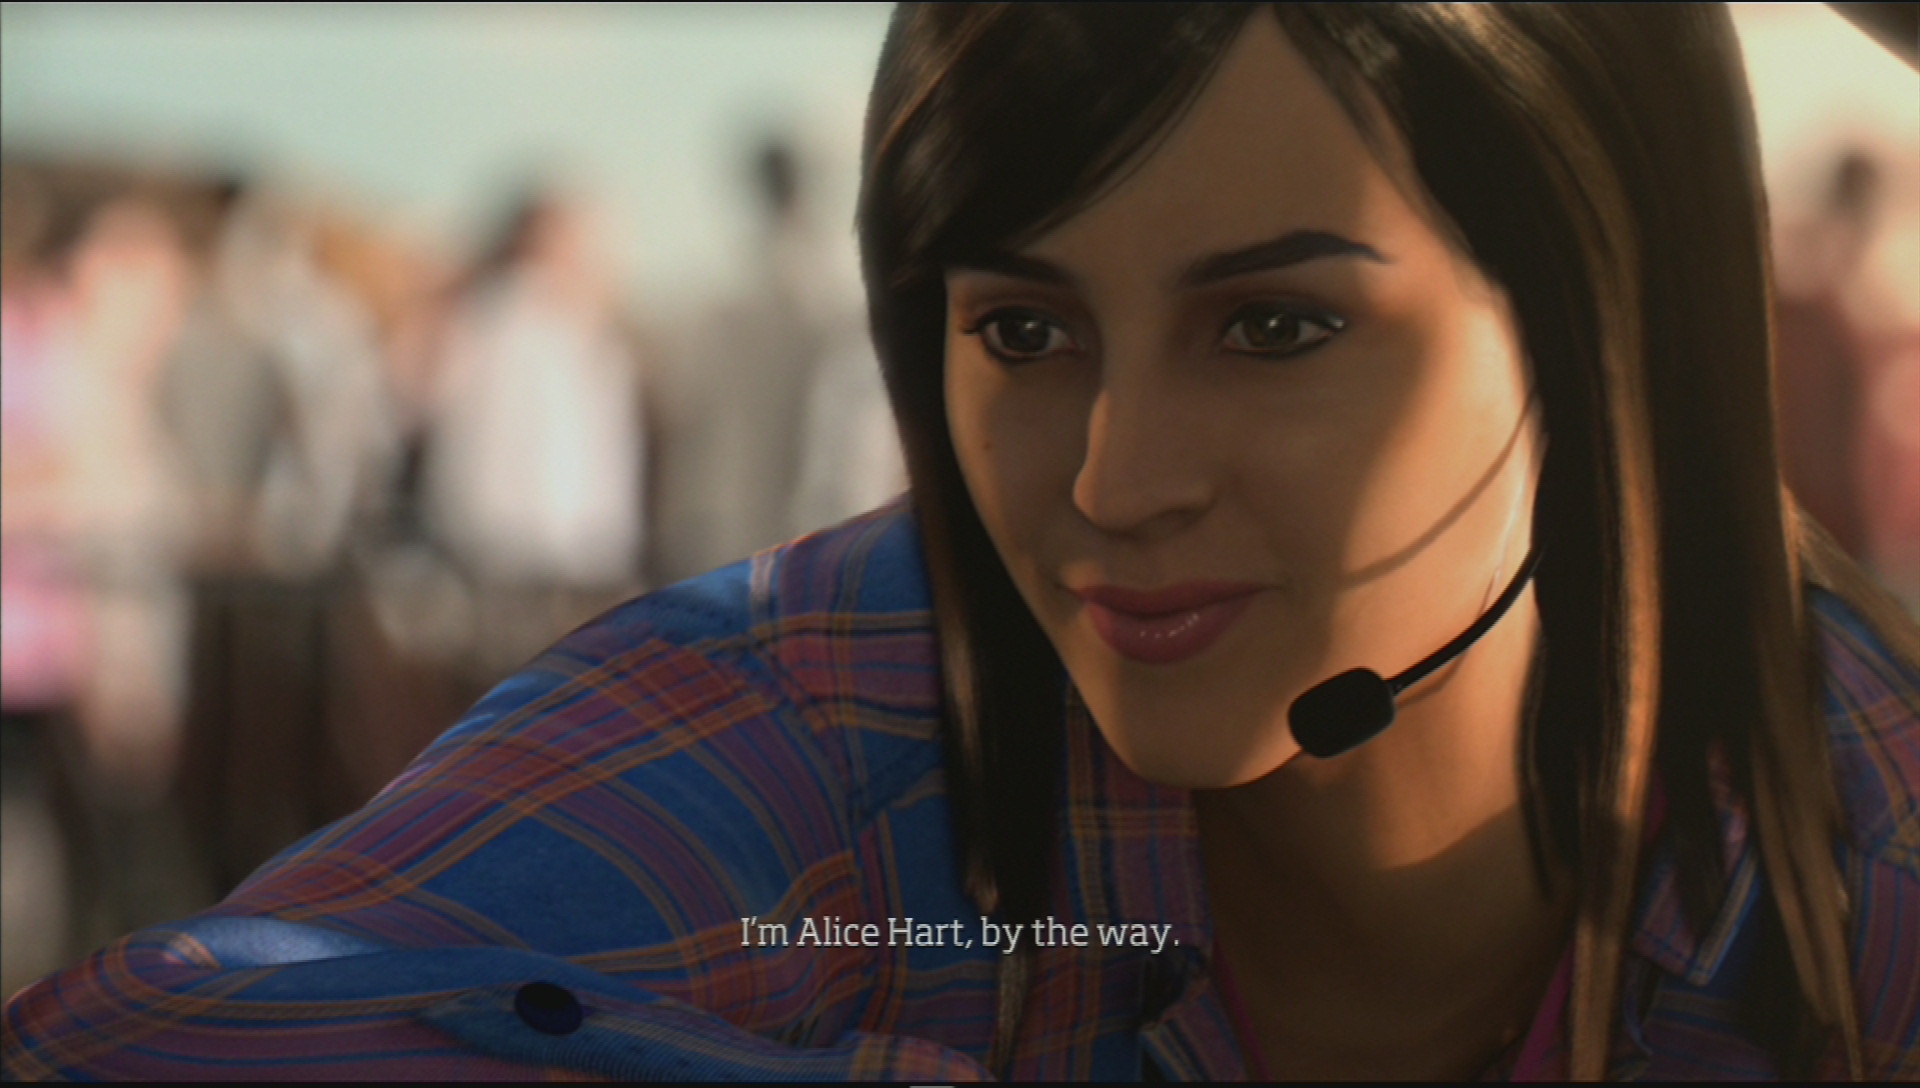 Forza Horizon introduces you to Alice Hart, CEO of Horizon